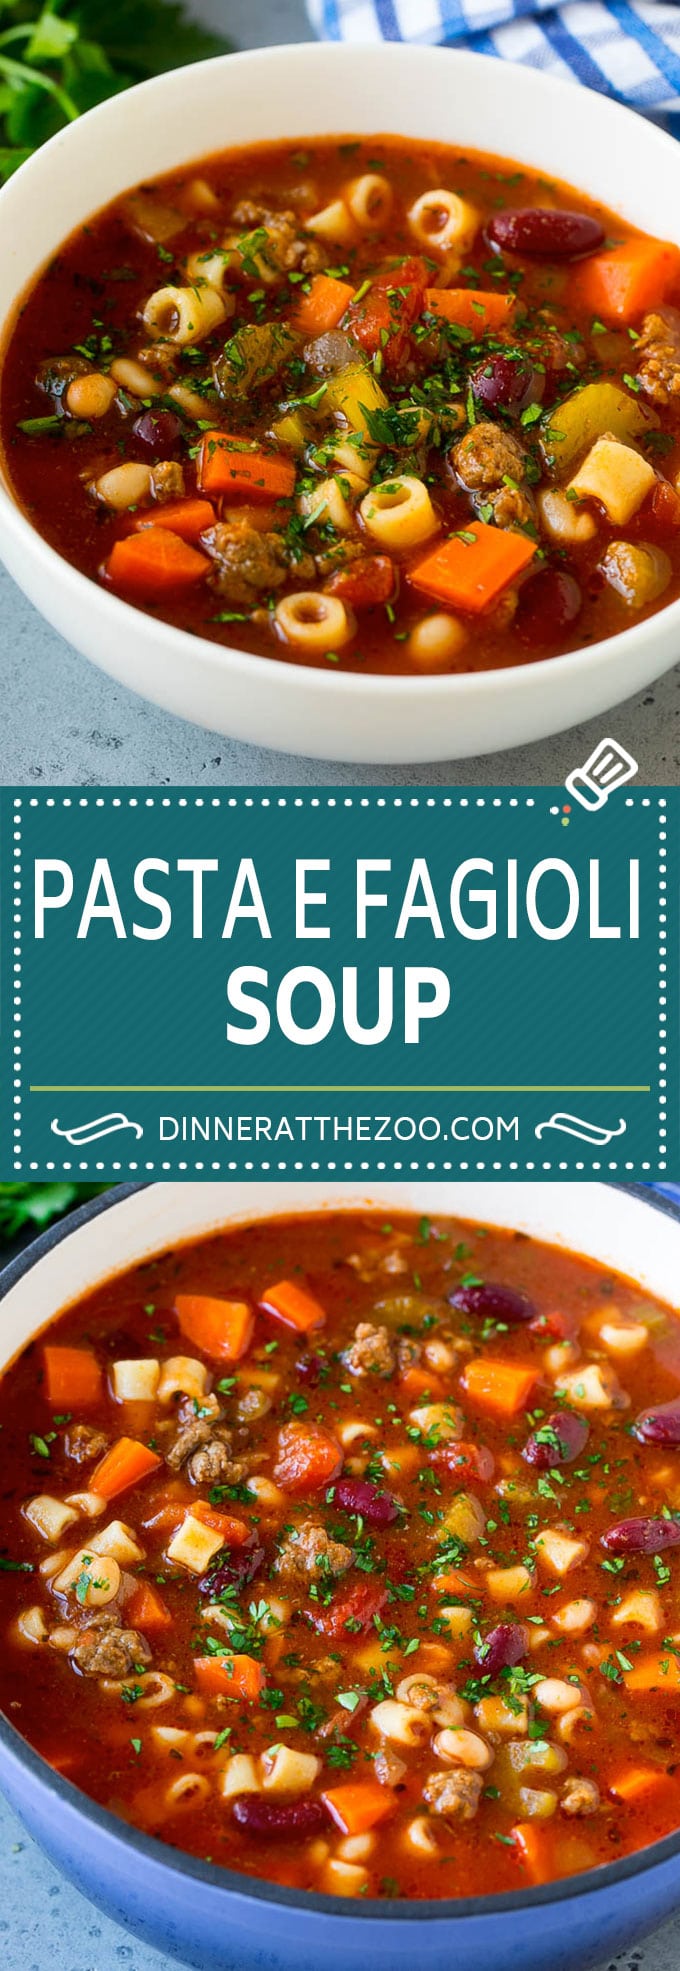 Pasta e Fagioli Soup | Pasta Fazool | Beef Soup | Italian Soup #soup #beef #italianfood #pasta #dinner #dinneratthezoo